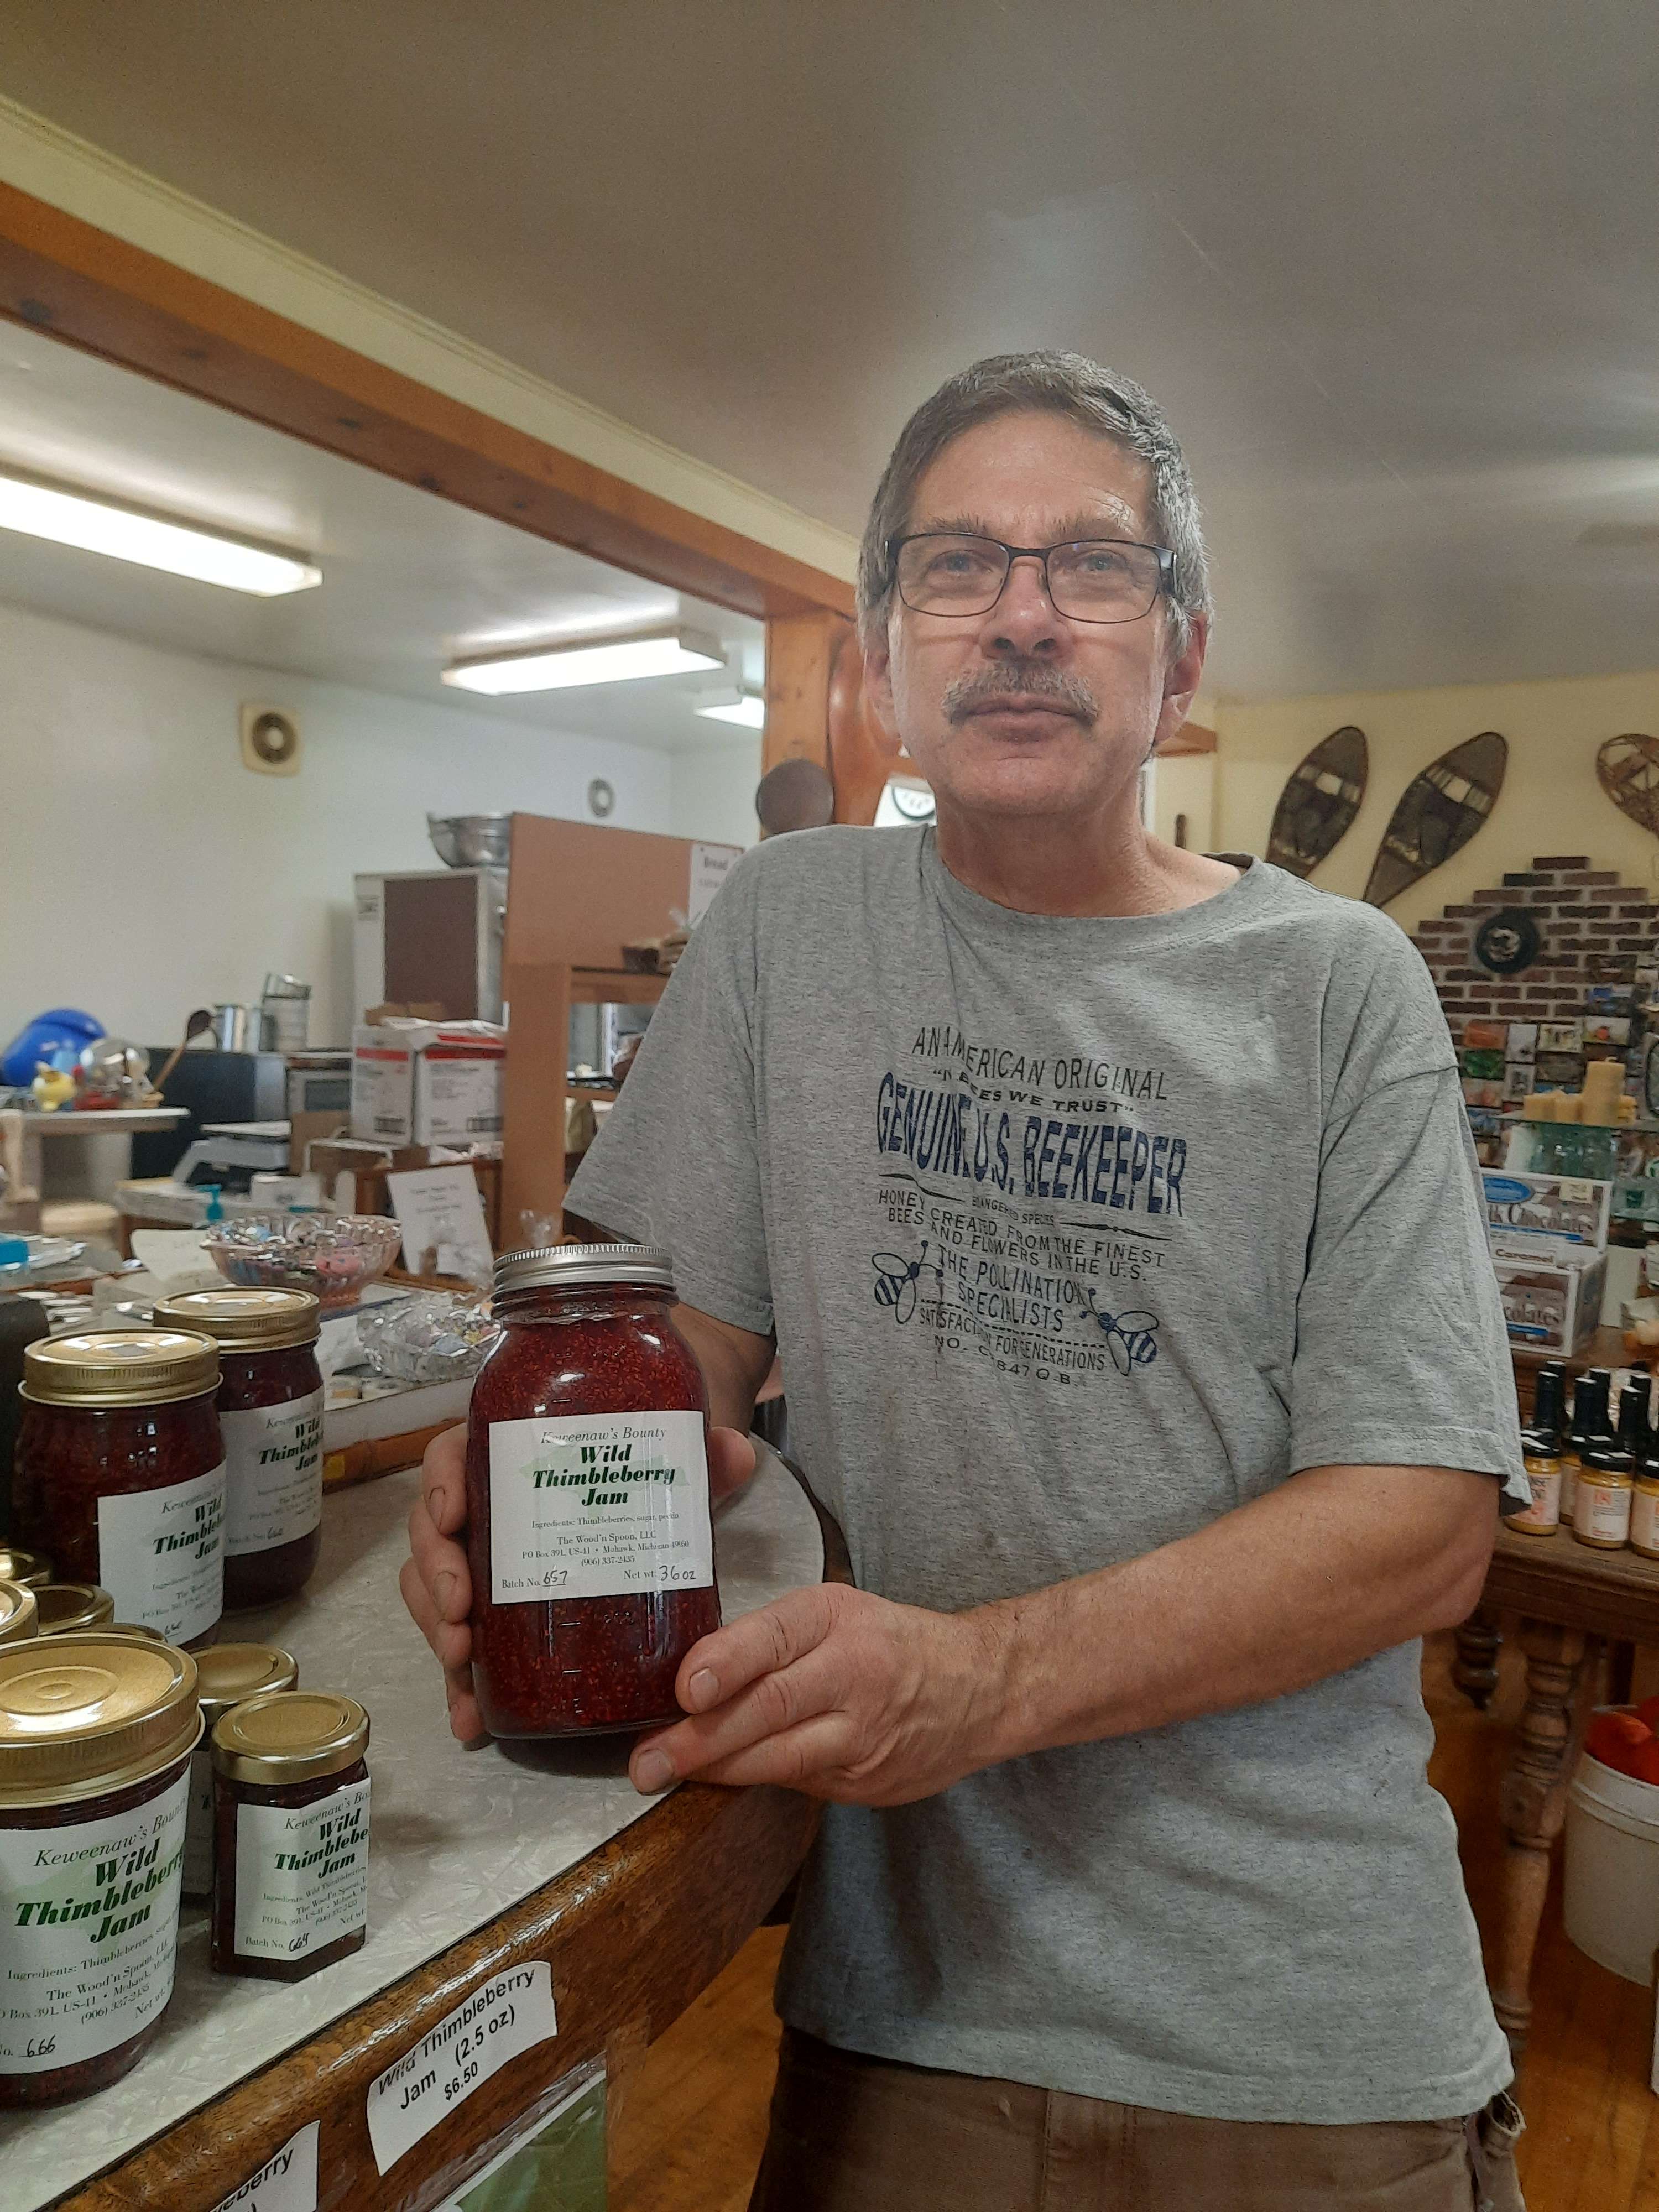 Shop Owner Holding Jar of Thimbleberry Jam